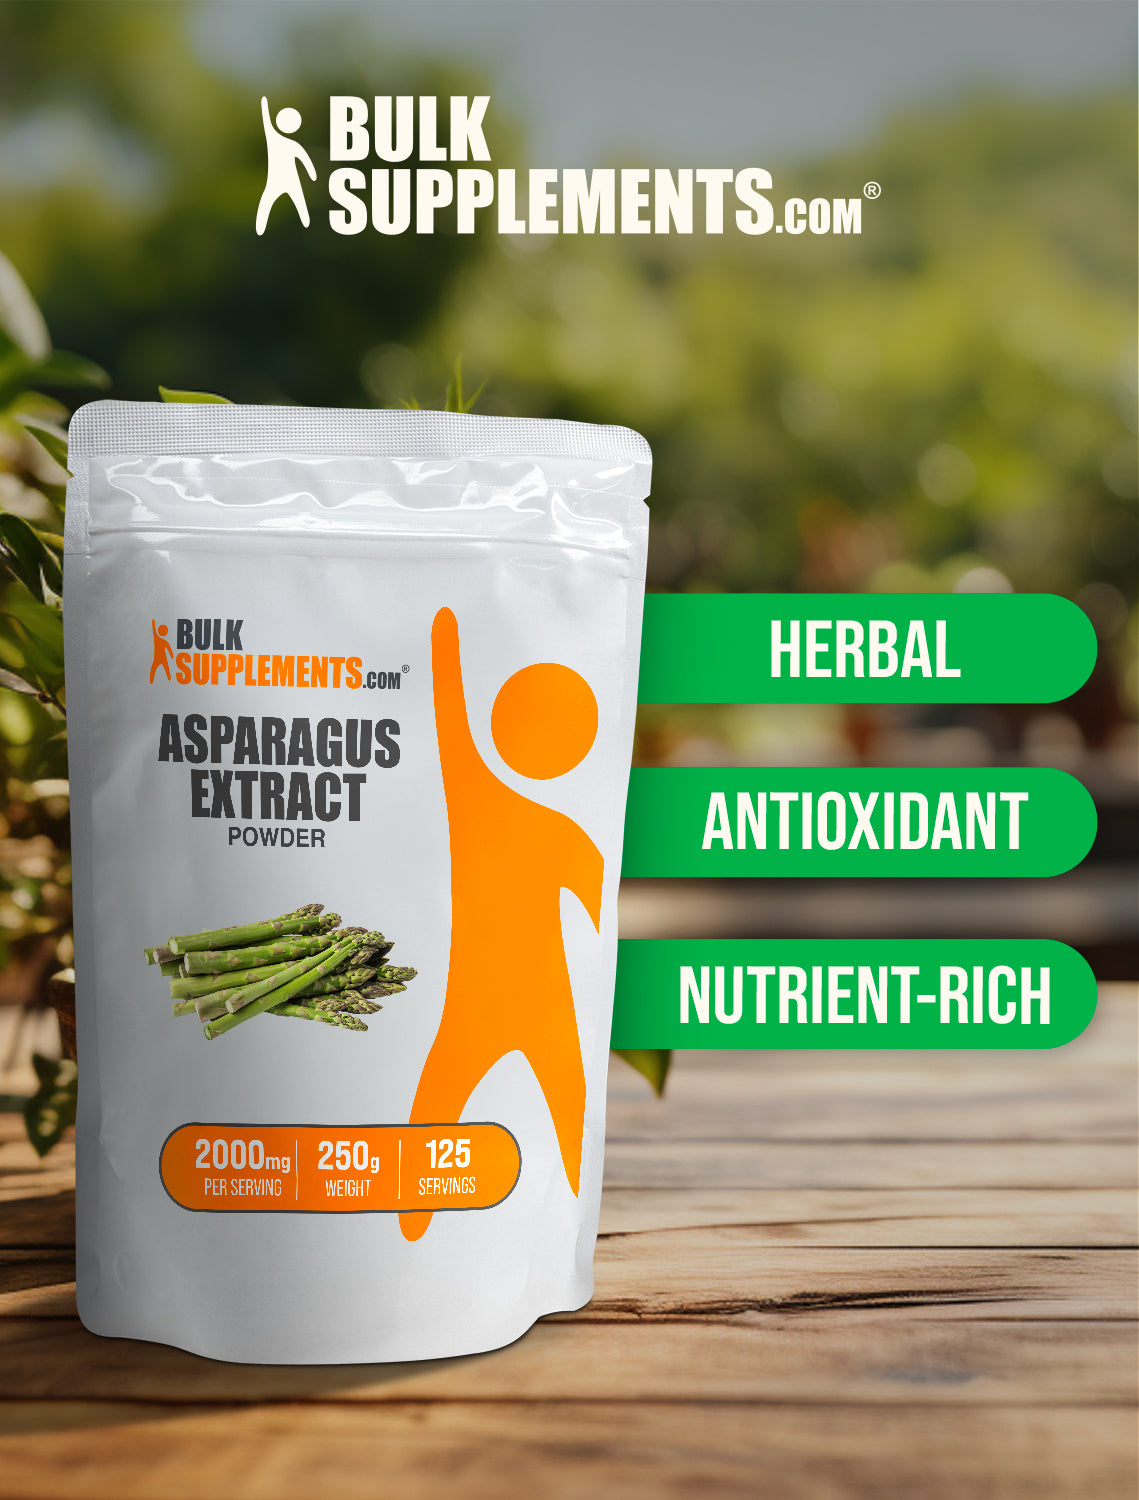 Asparagus Extract powder keyword image 250g